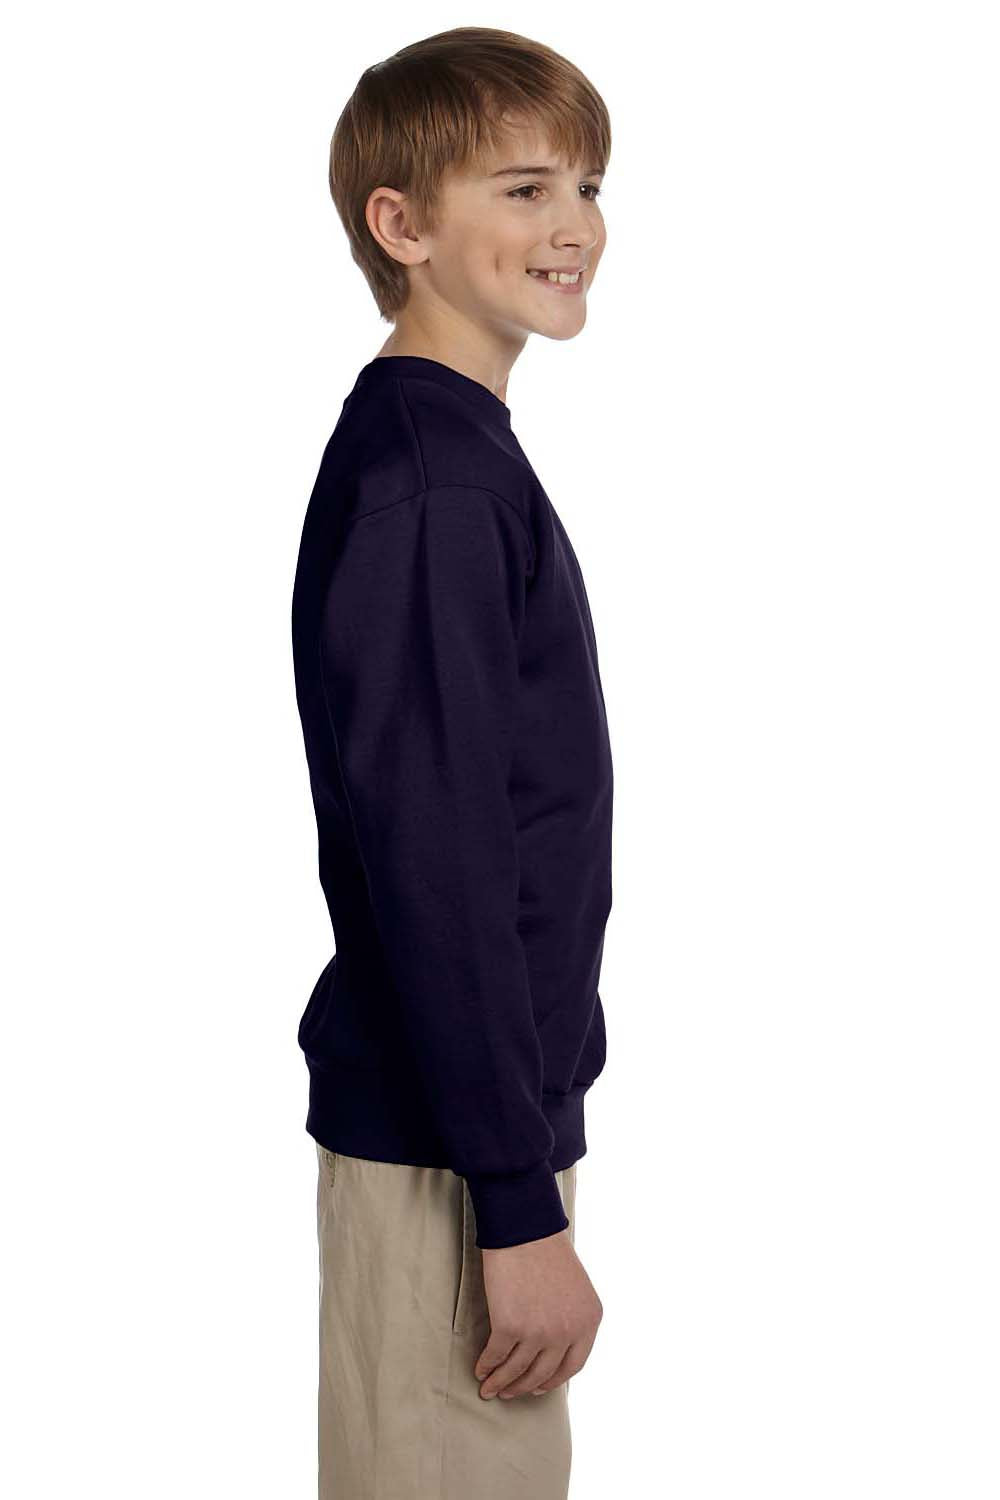 Hanes P360 Youth EcoSmart Print Pro XP Fleece Crewneck Sweatshirt Navy Blue Side